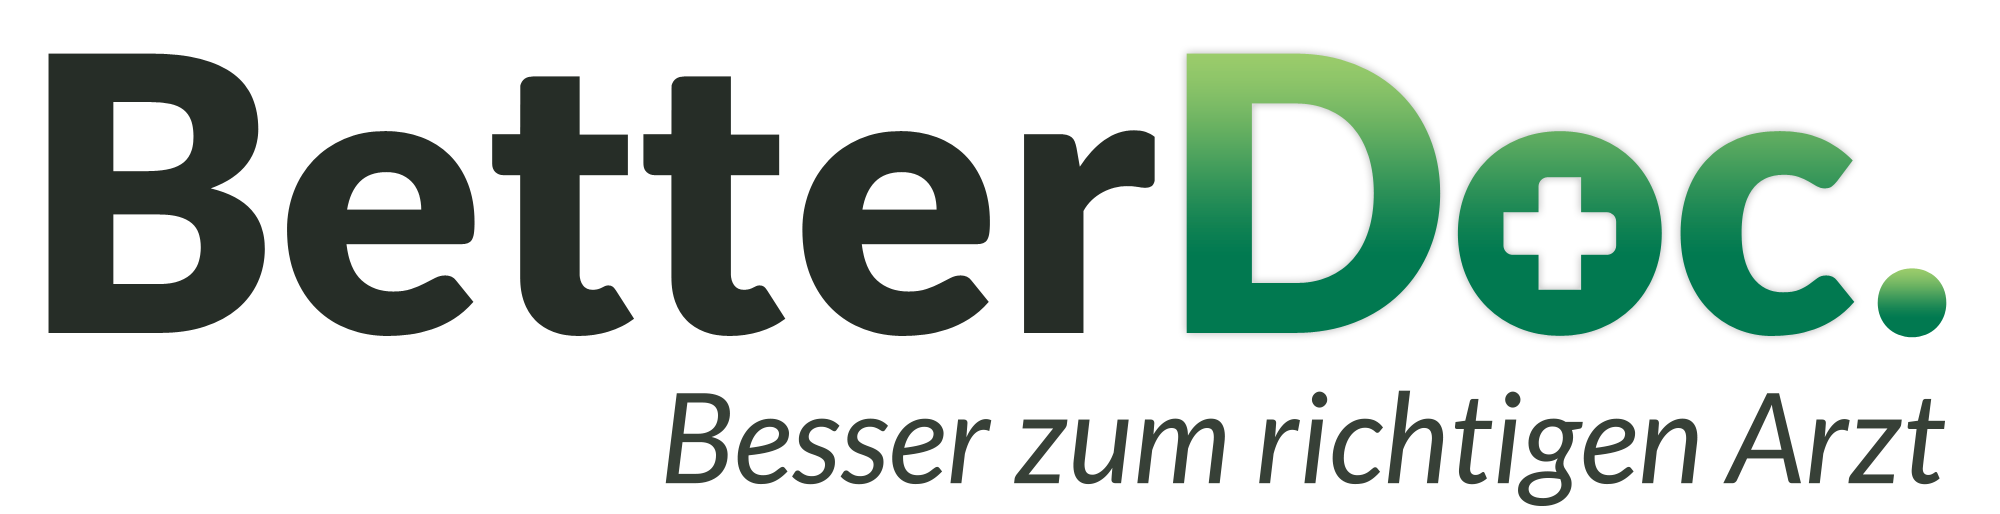 Logo BetterDoc